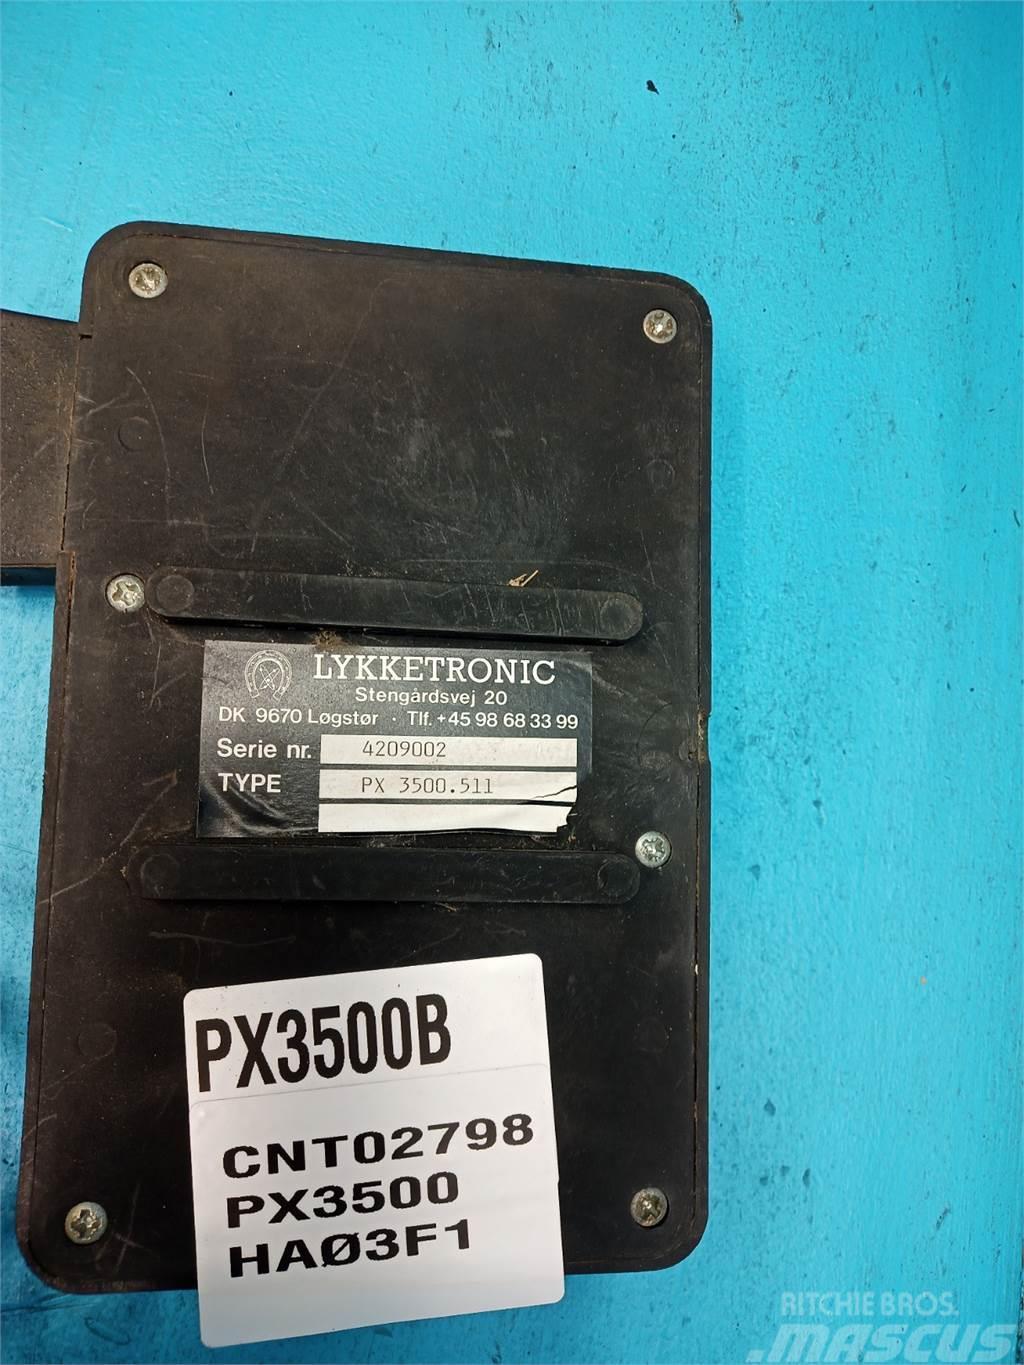  Lykketronic PX3500 Electrónica